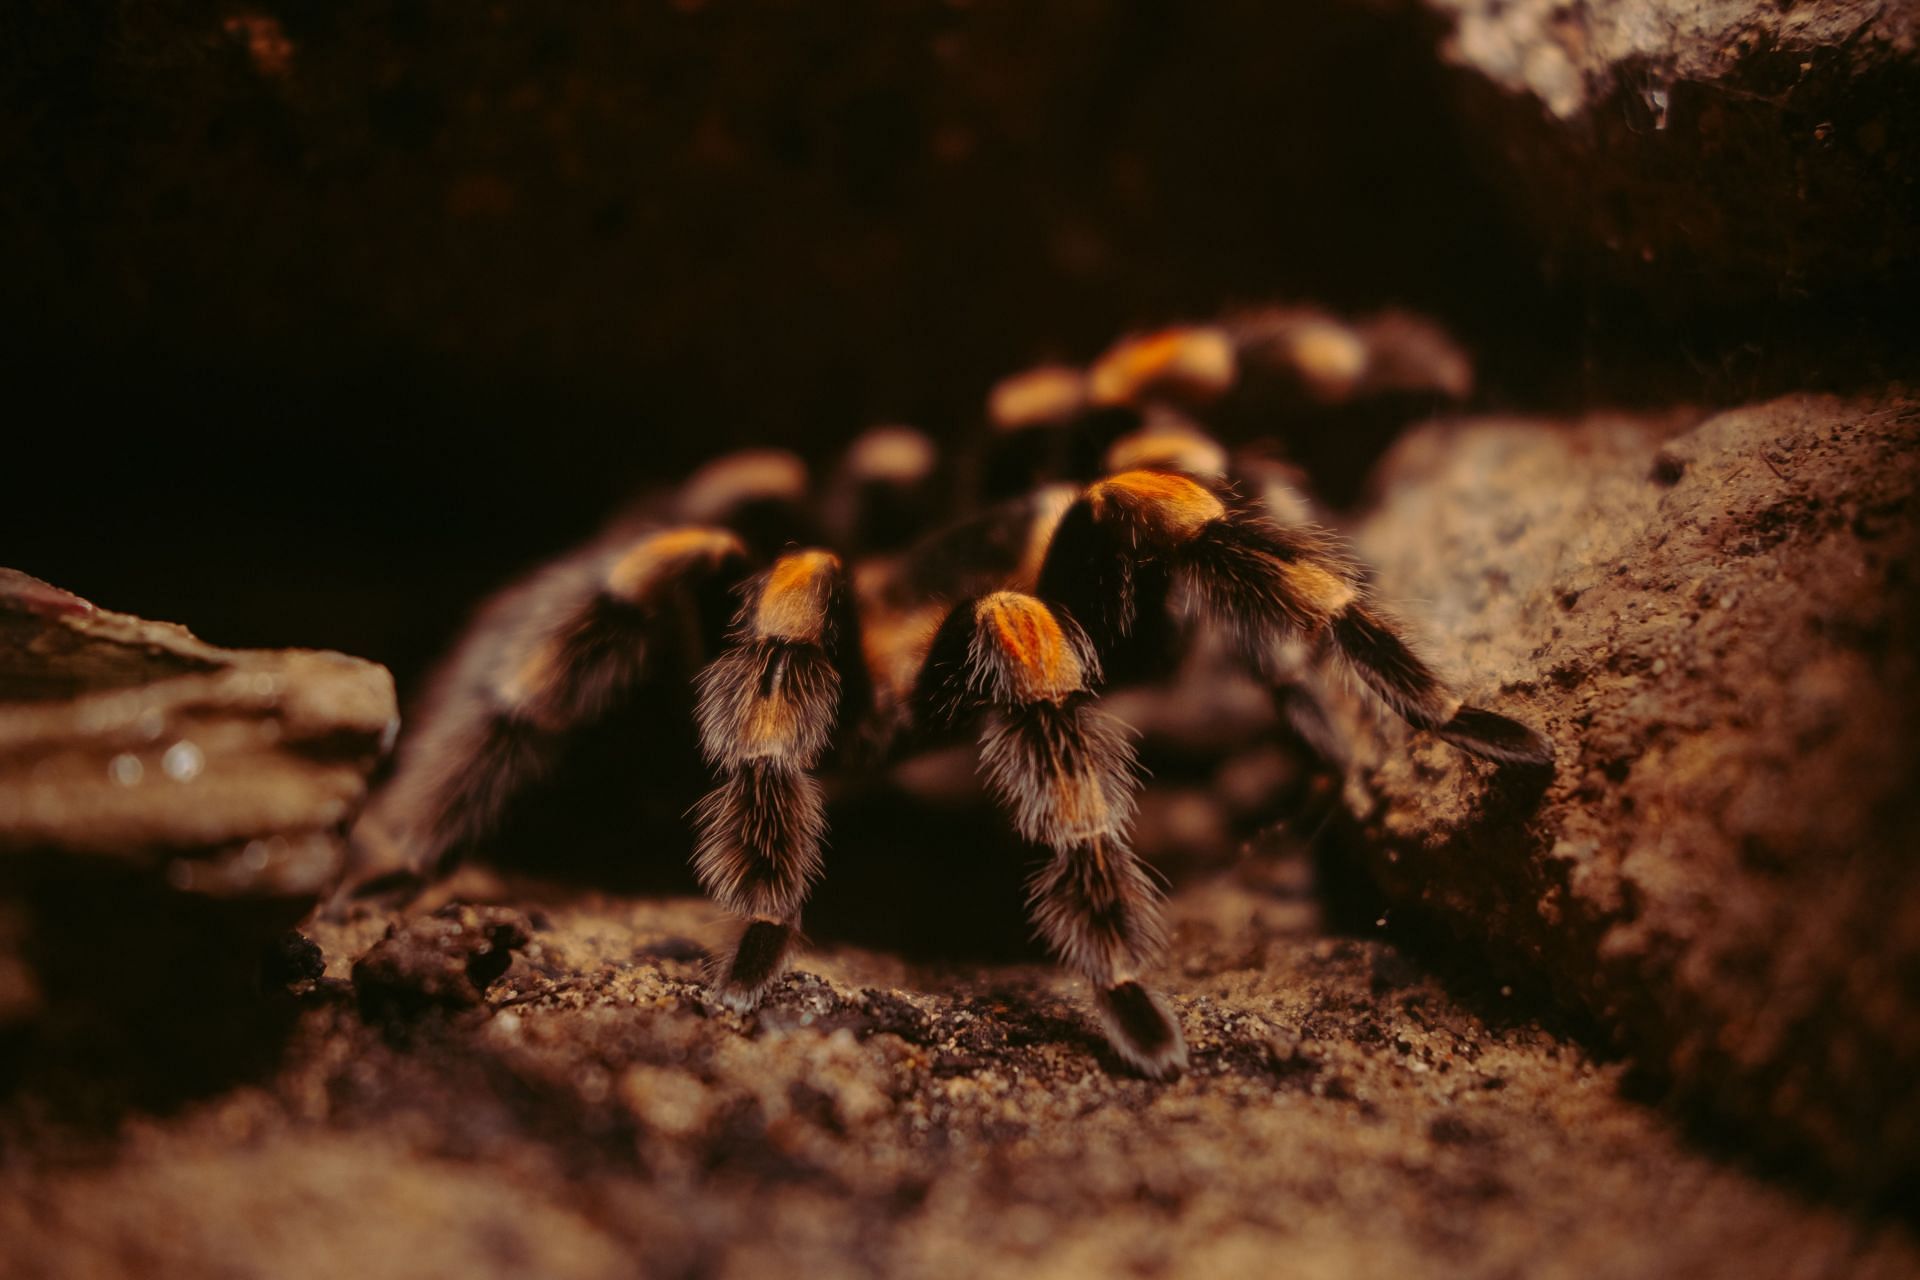 These spider bites are very rare but venomous. (Image via Unsplash/Thomas Oldenburger)